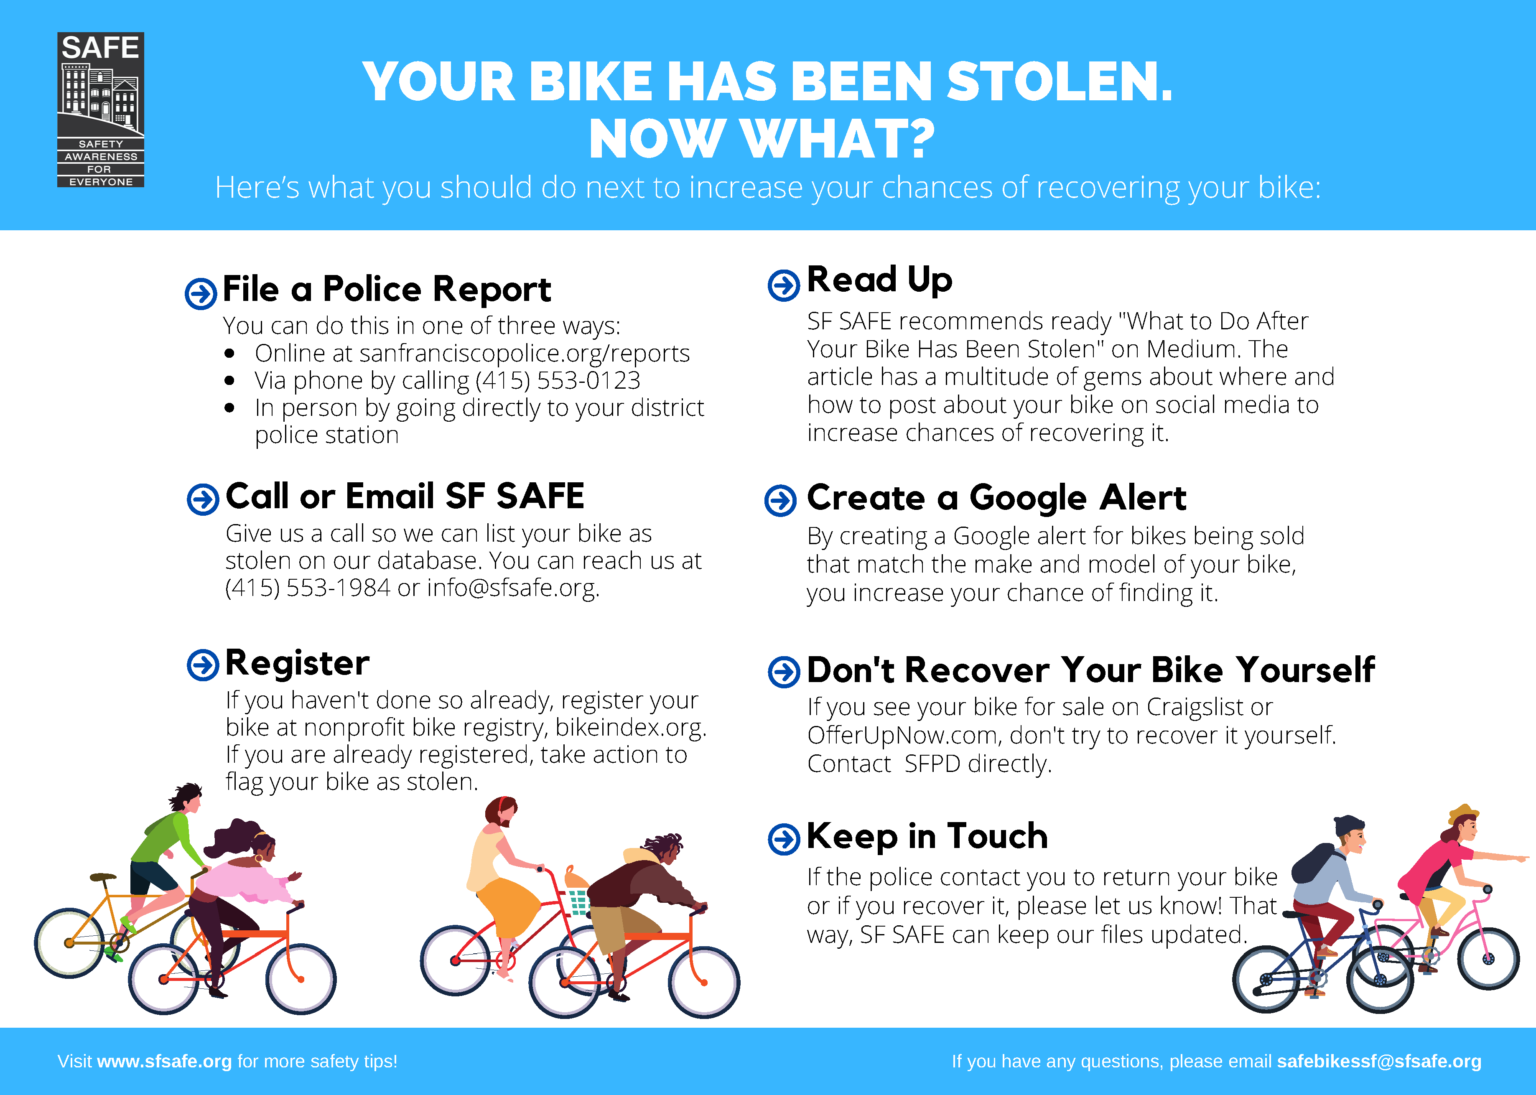 Bike was stolen. Being a Bike игра. Recover Bike. Stolen your Bike. Как переводится bike